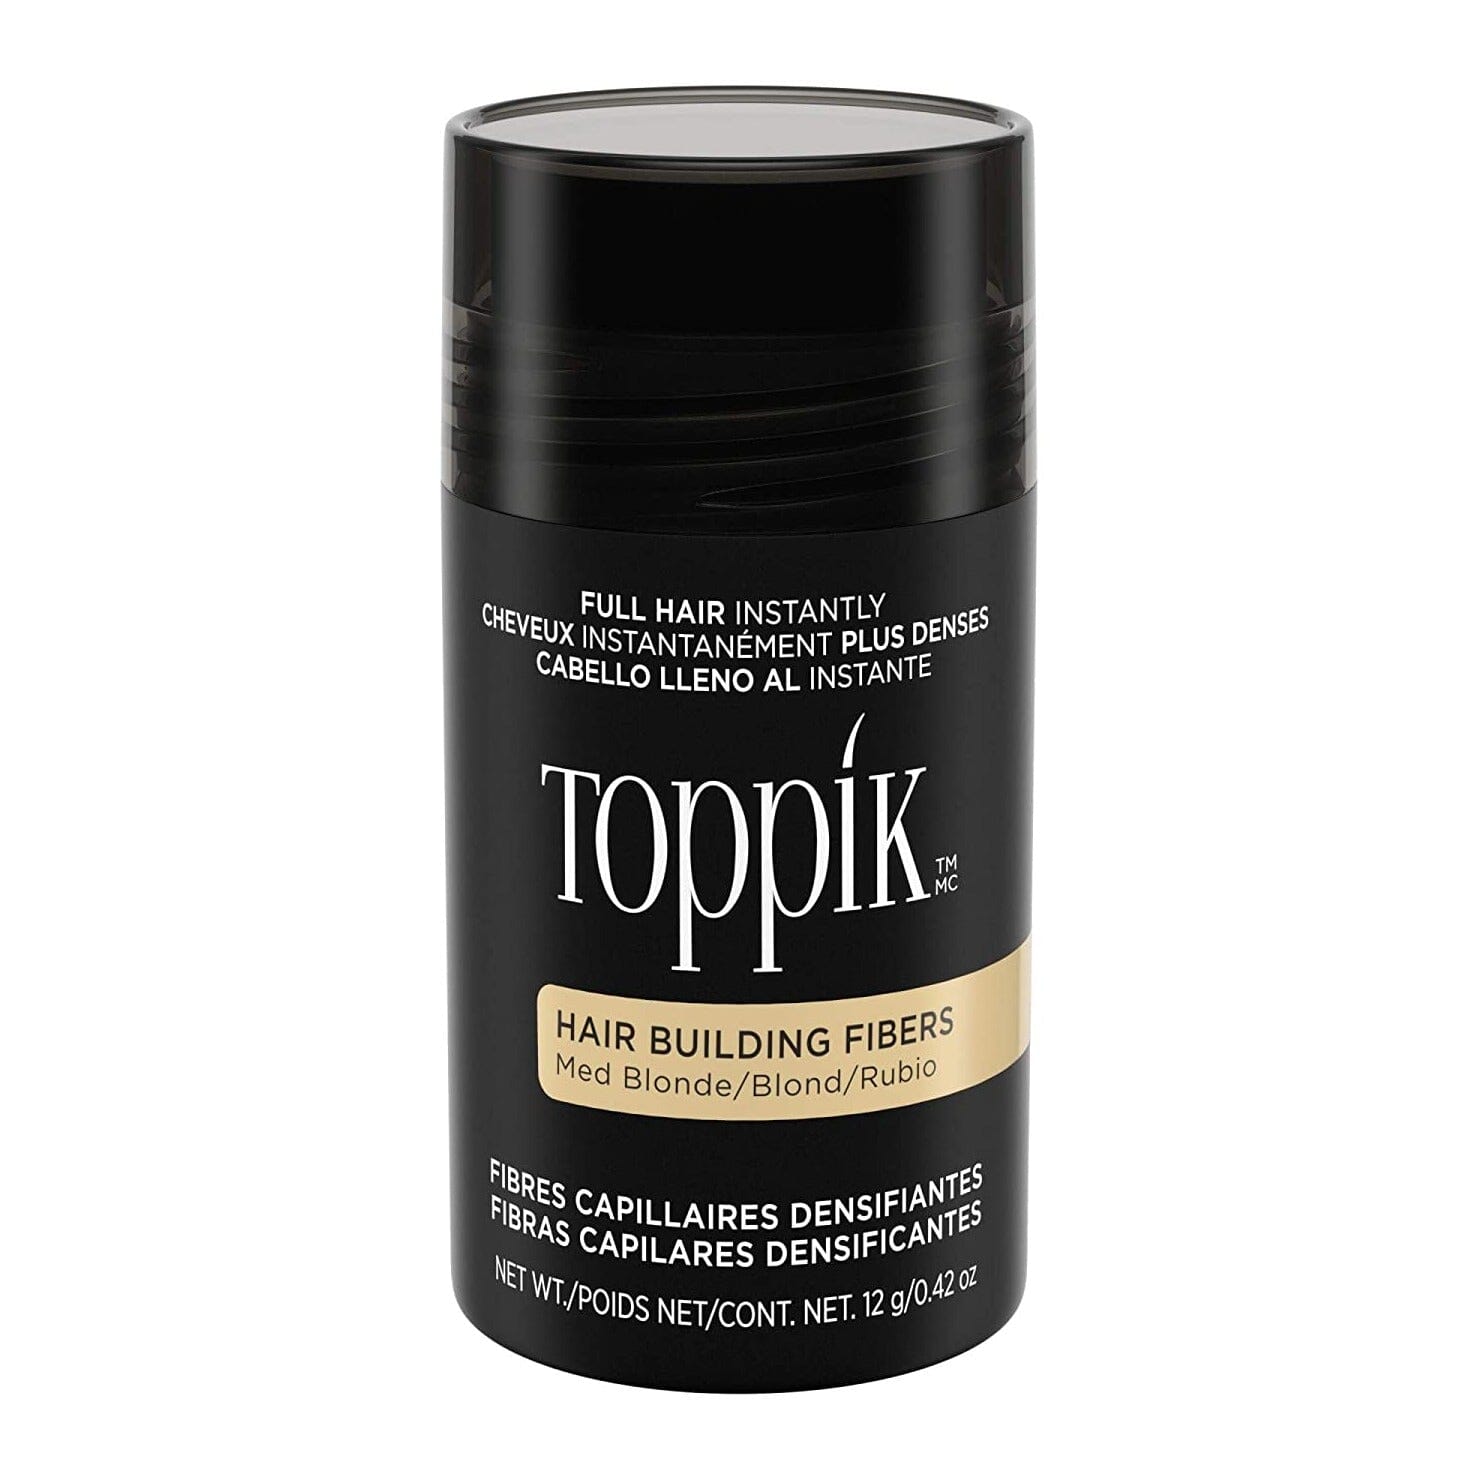 Toppik Hair Building Fibers - MEDIUM BLONDE Hair Loss Concealers Toppik 0.42 oz Shop at Exclusive Beauty Club